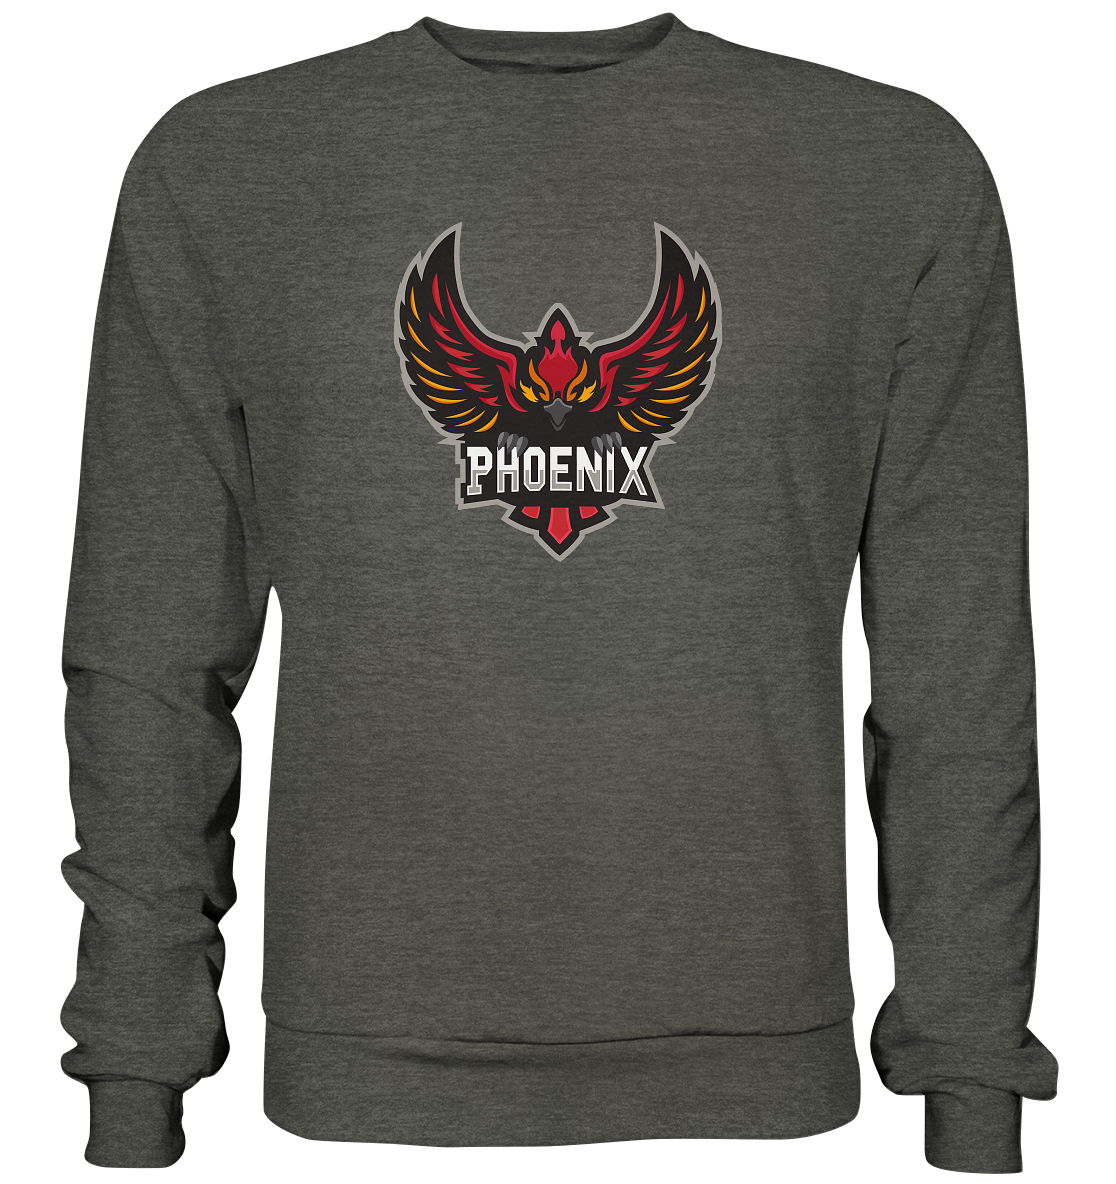 TEAM PHOENIX - Basic Sweatshirt